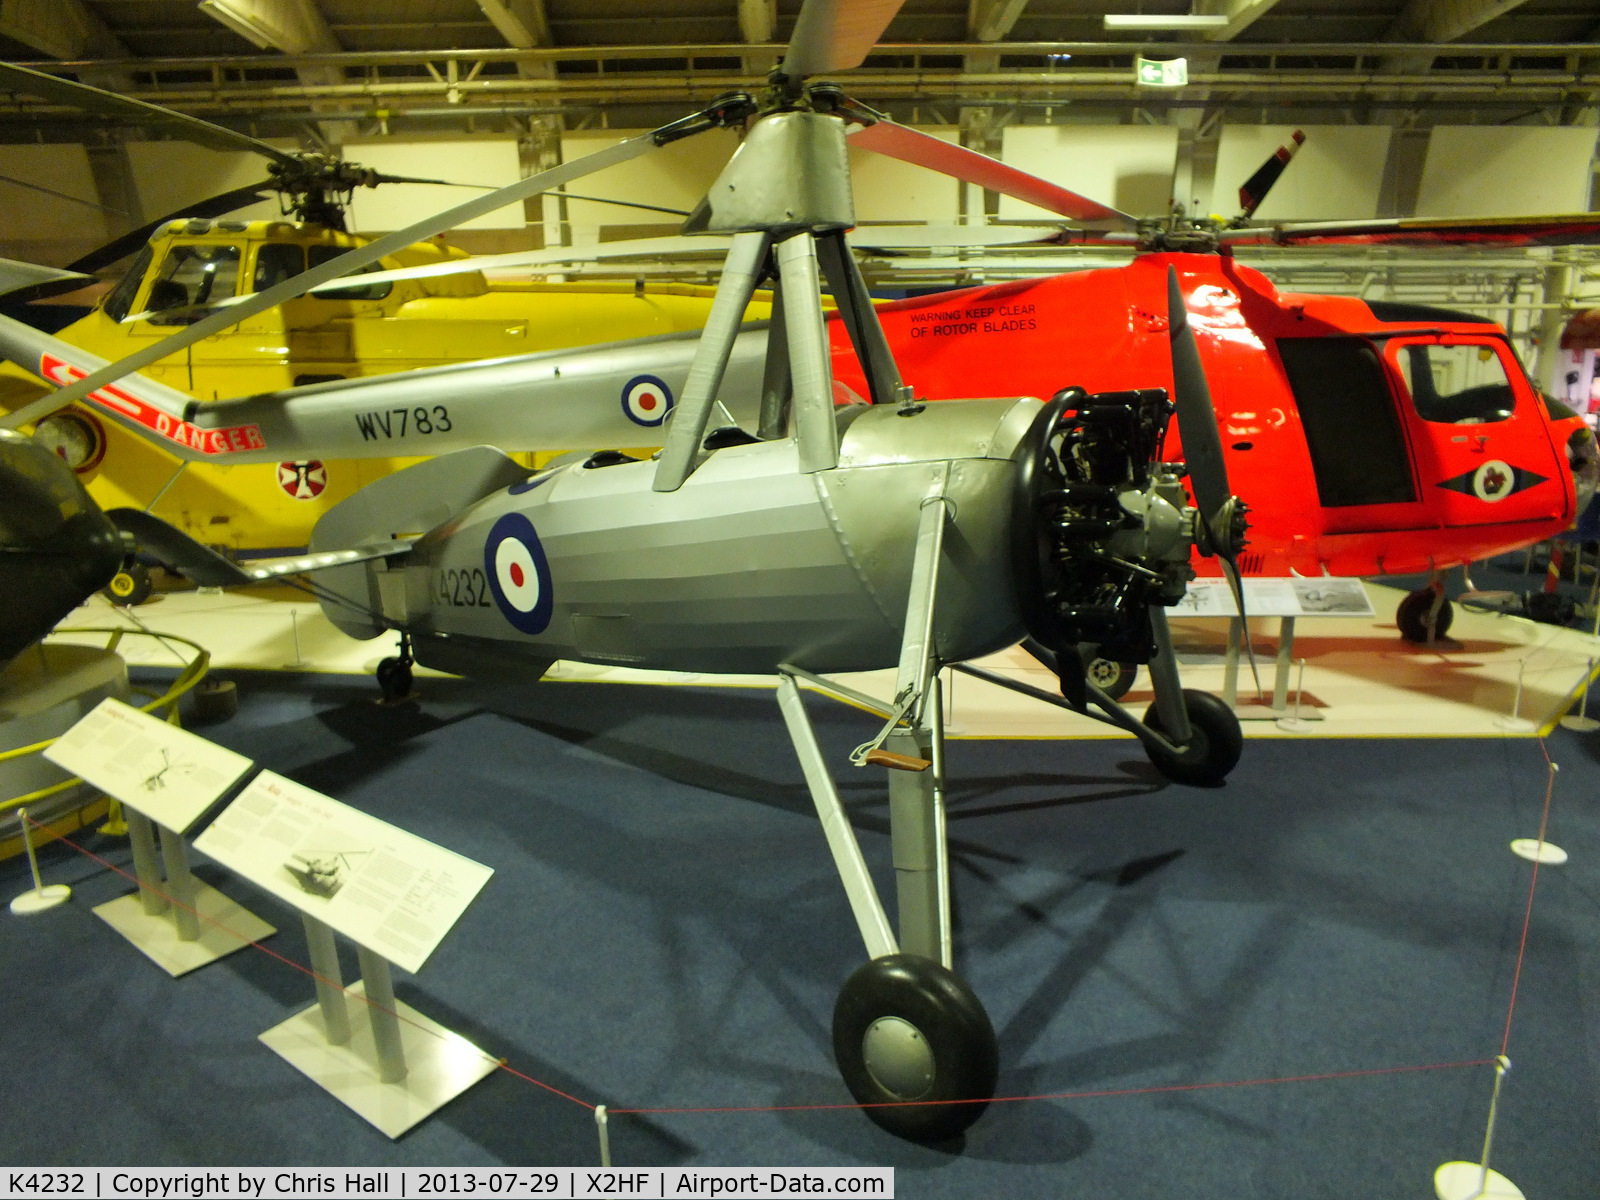 K4232, Avro 671 Rota I (Cierva C-30A) C/N R3/CA/40, Displayed at the RAF Museum, Hendon